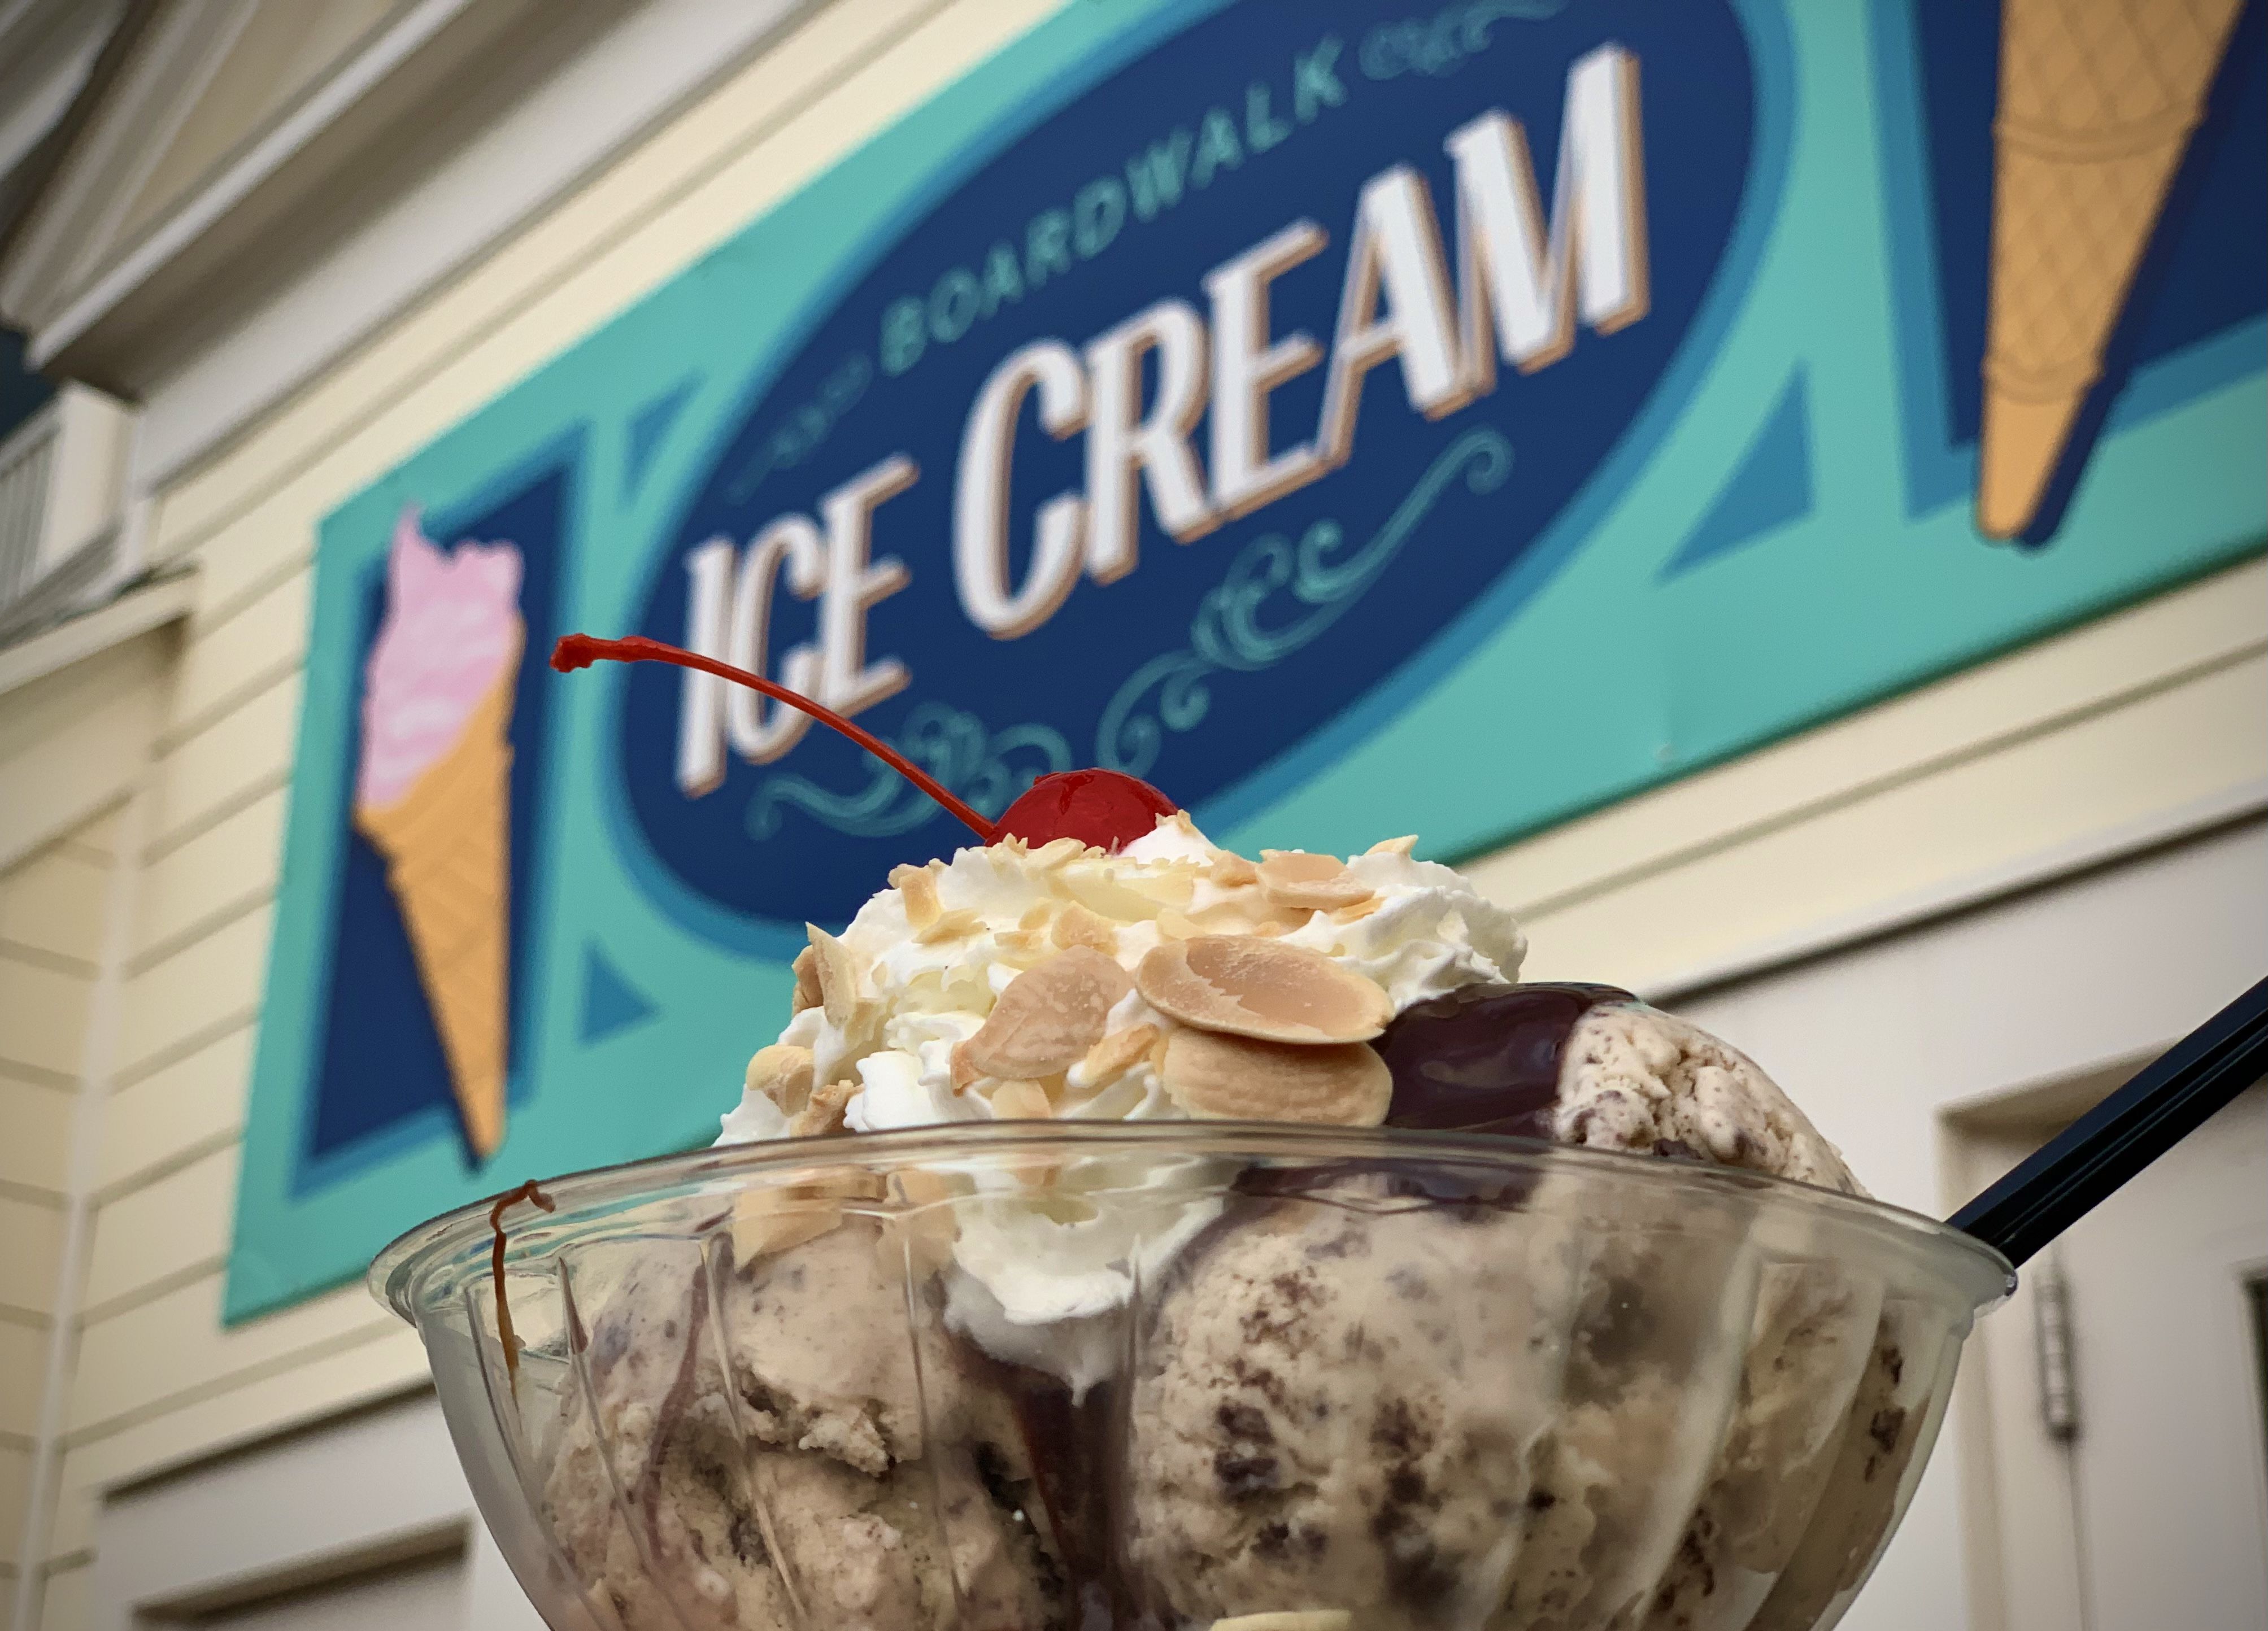 New ice cream shop opens at Disney’s BoardWalk resort